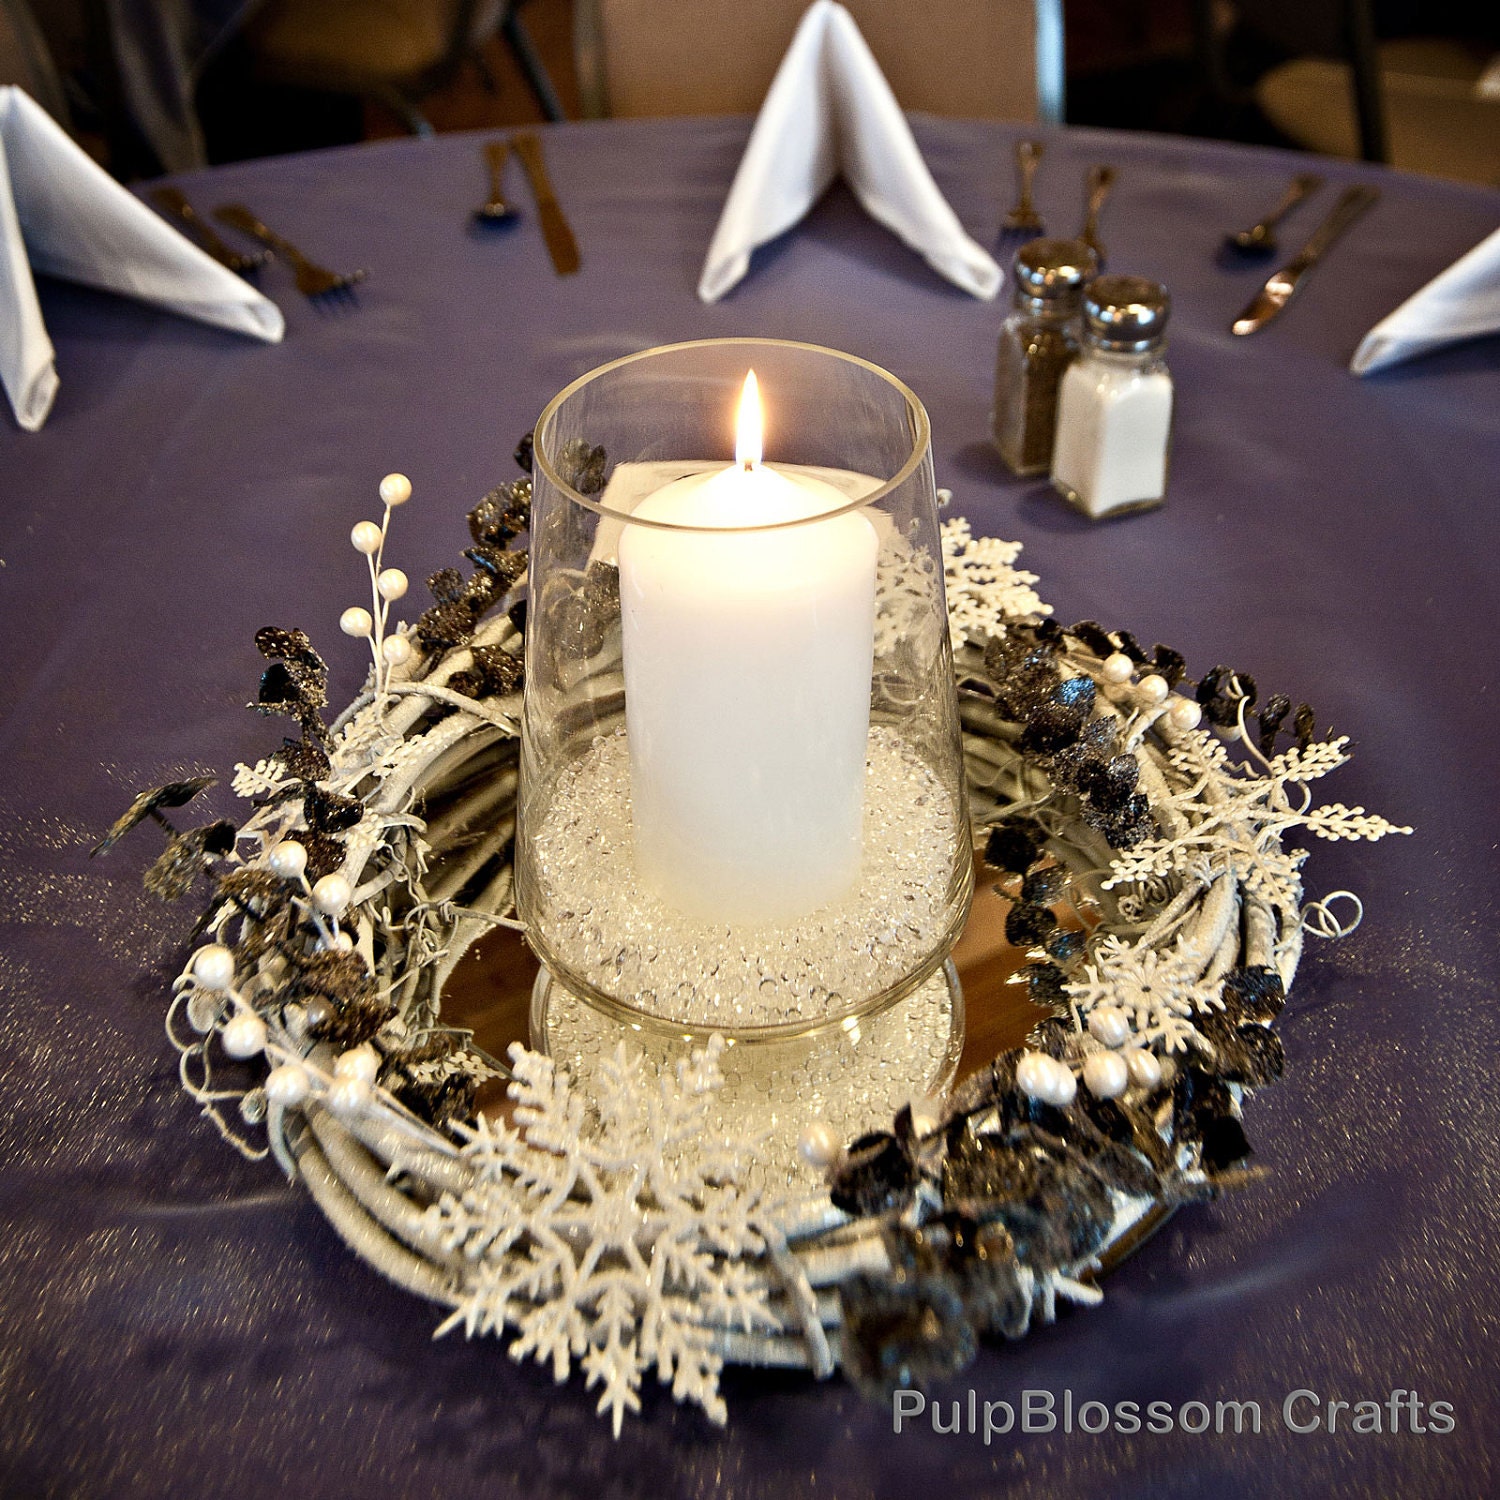 10 Winter Wedding Centerpieces Snowflake Theme from PulpBlossomCrafts